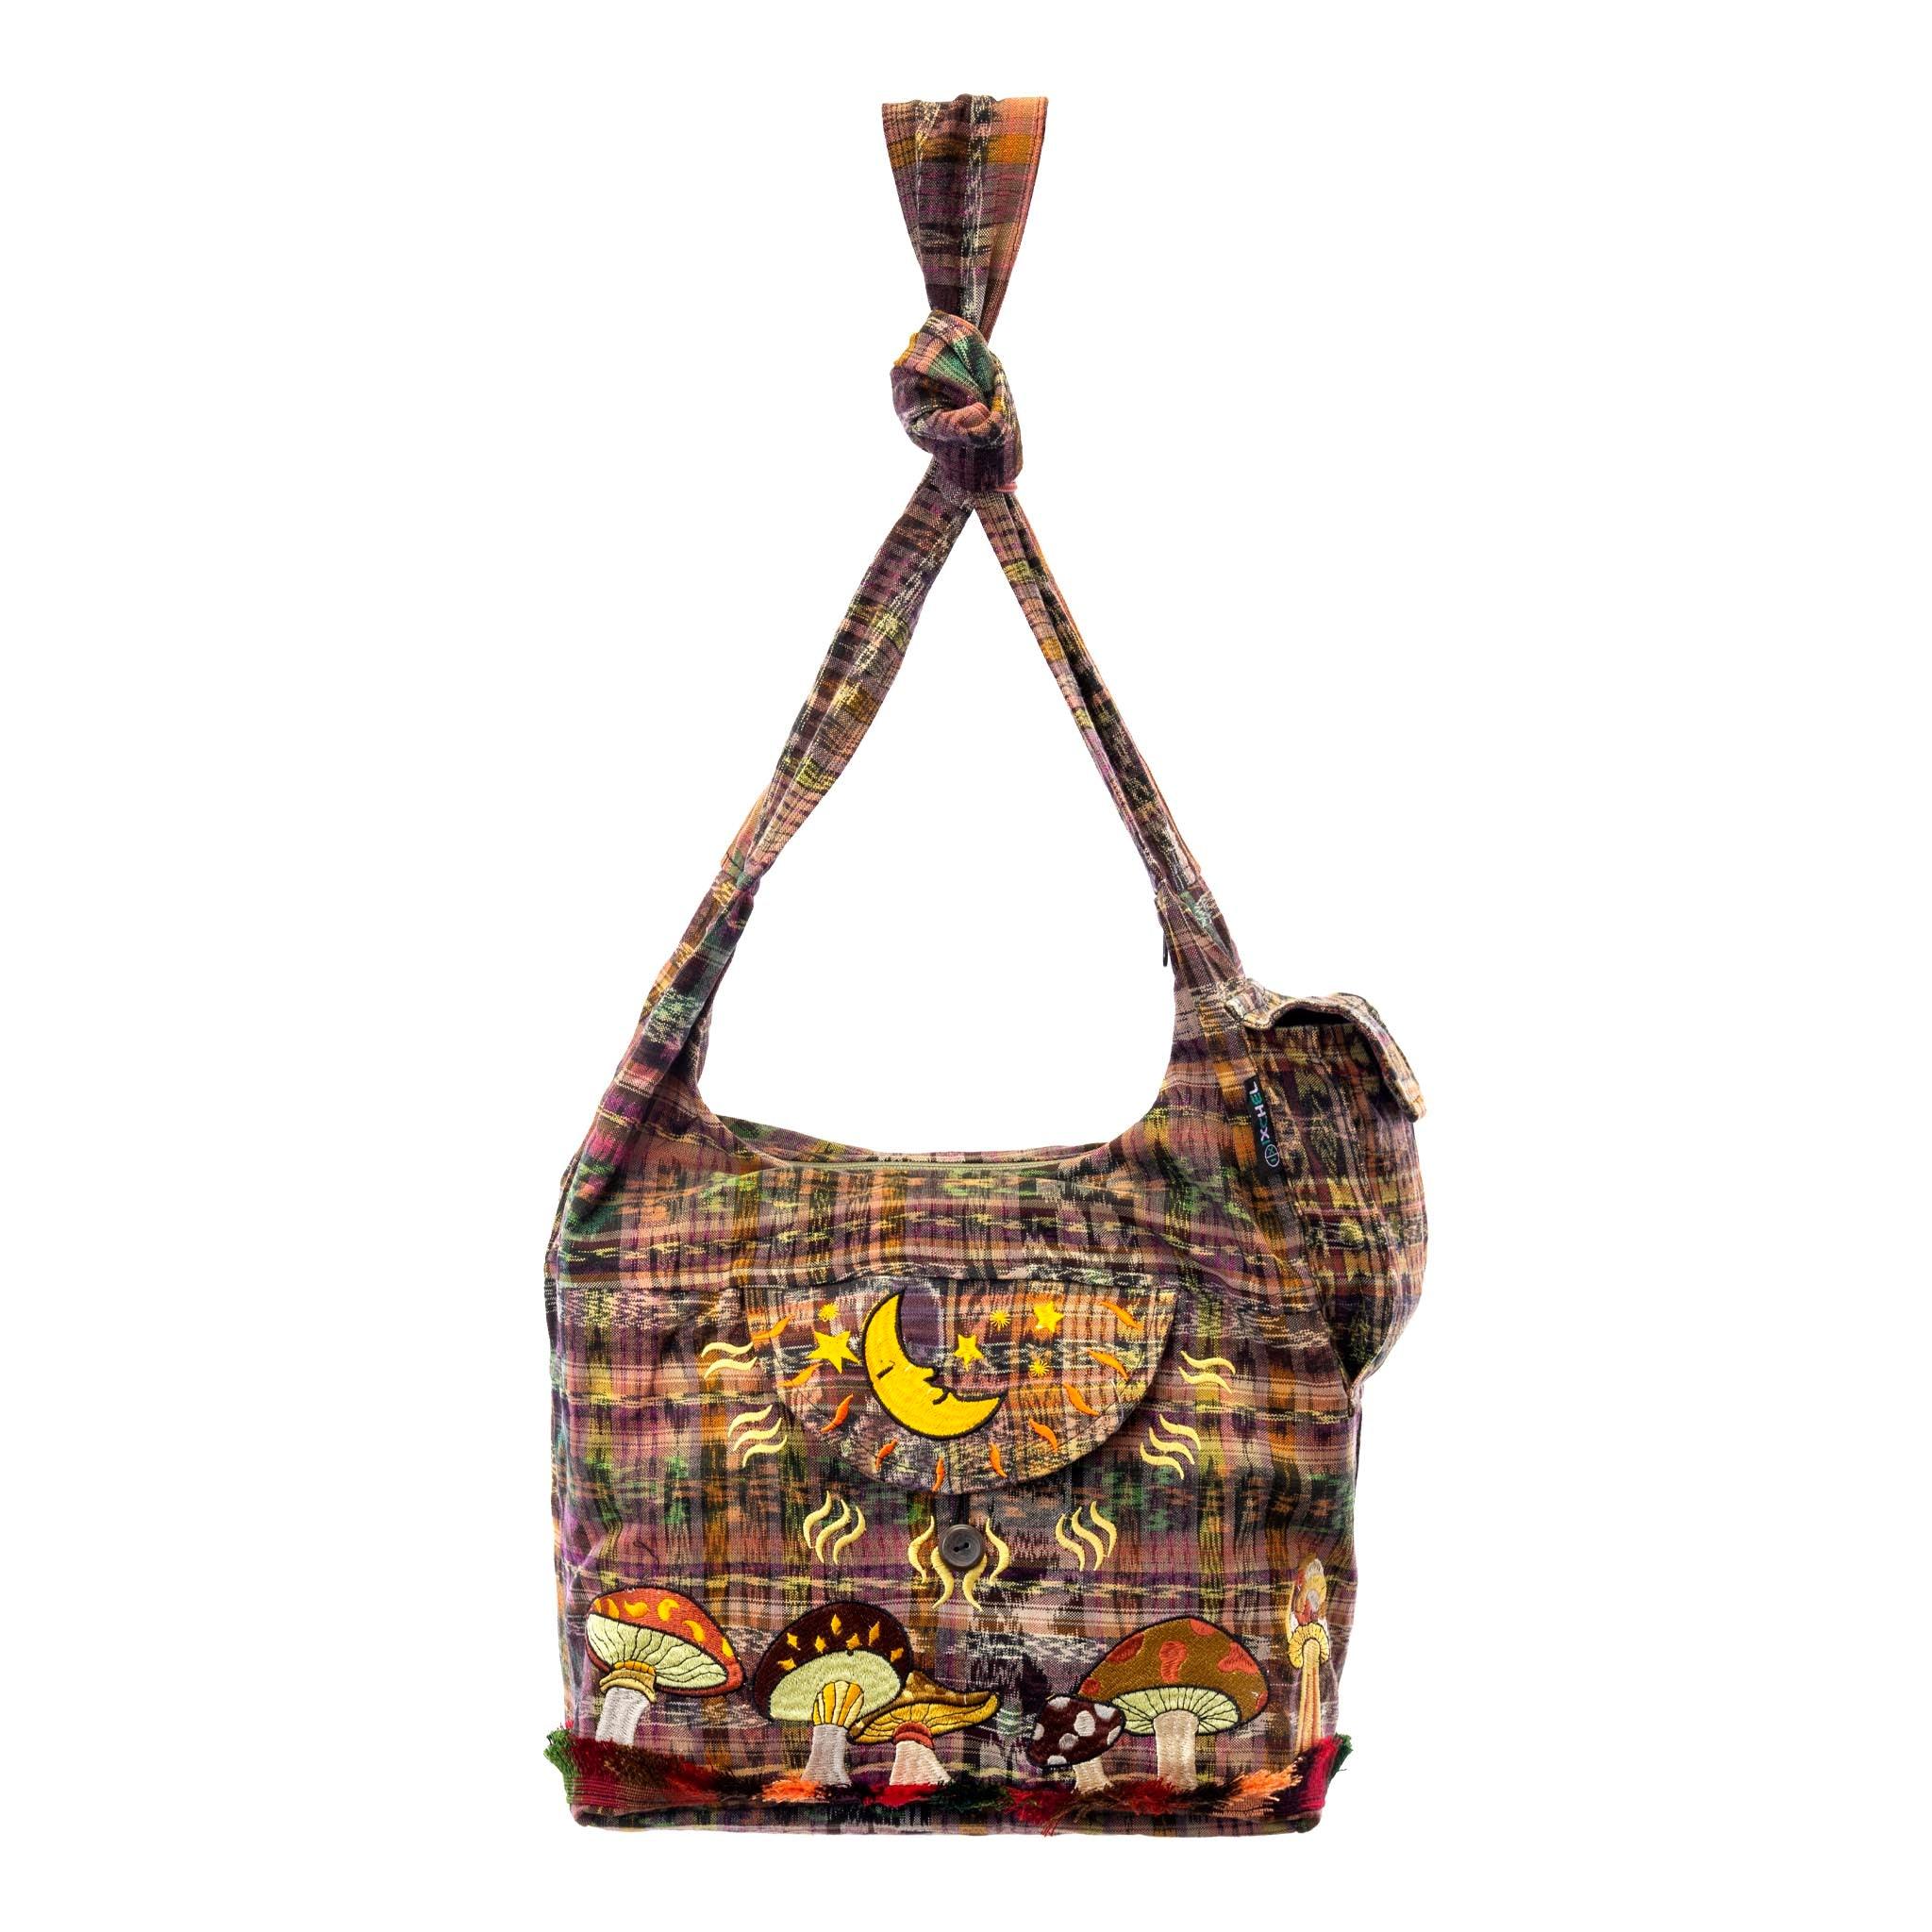 Wicked Dragon Clothing - Funky mushroom hippie shoulder bag